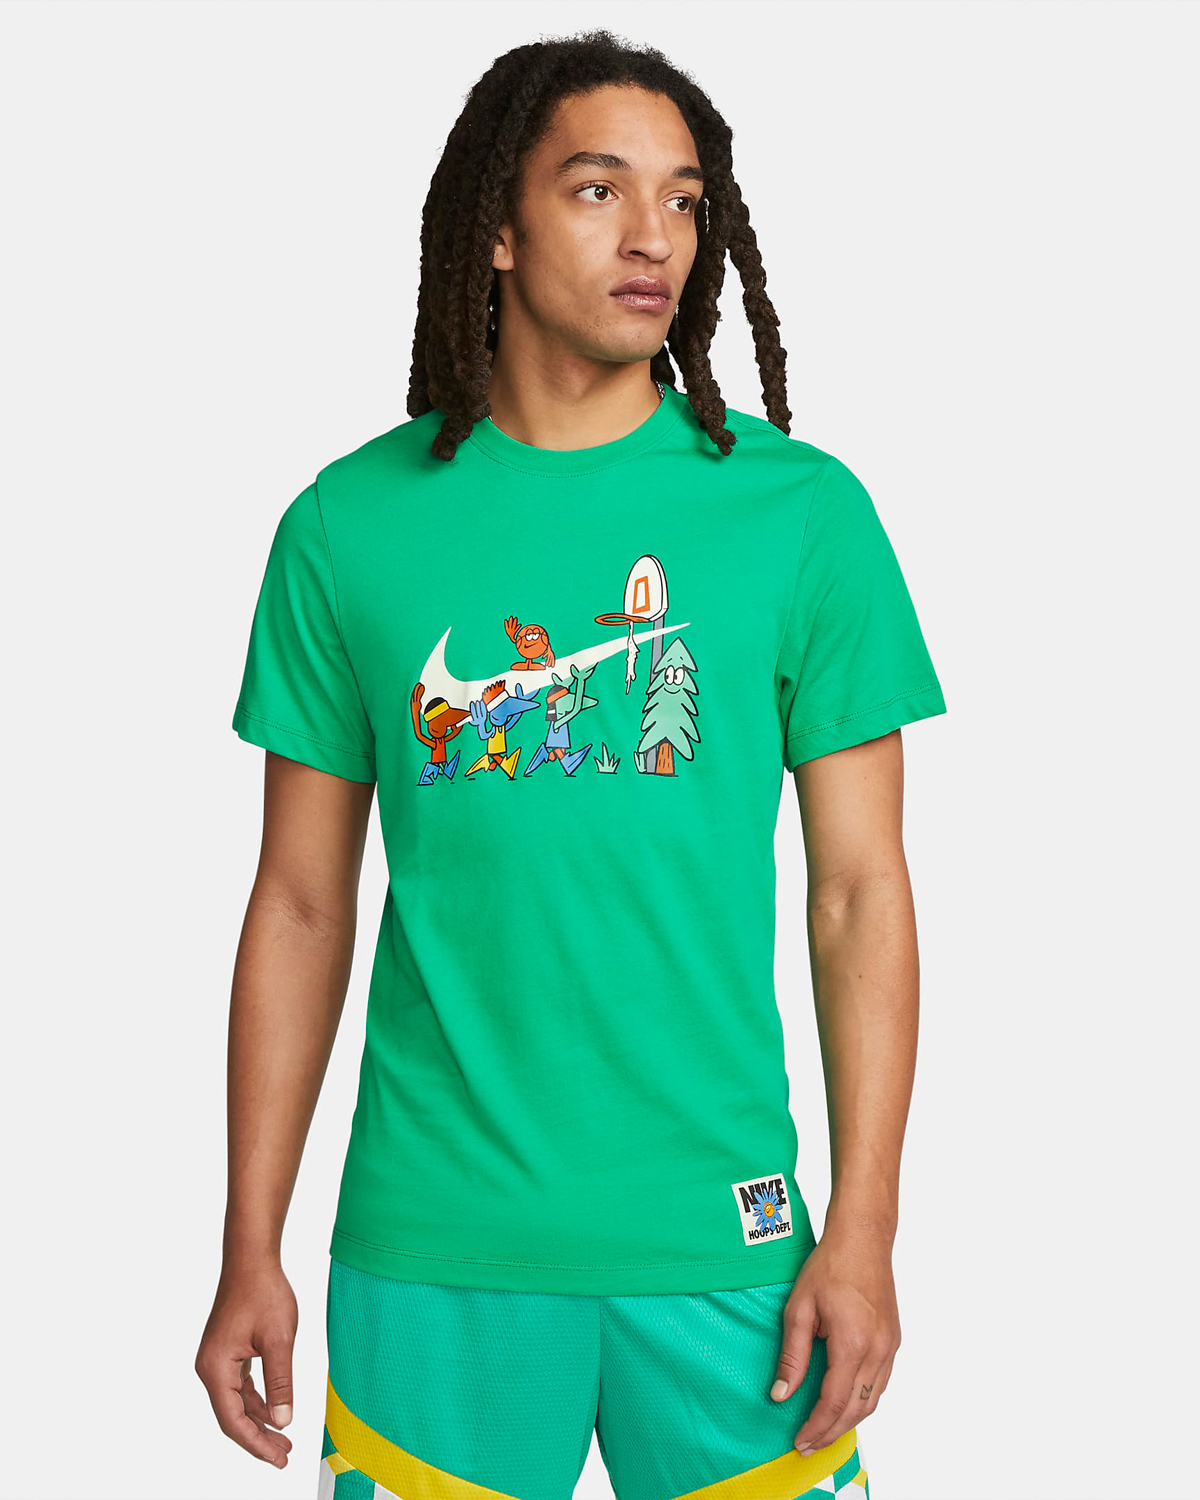 Nike-Stadium-Green-Basketball-T-Shirt